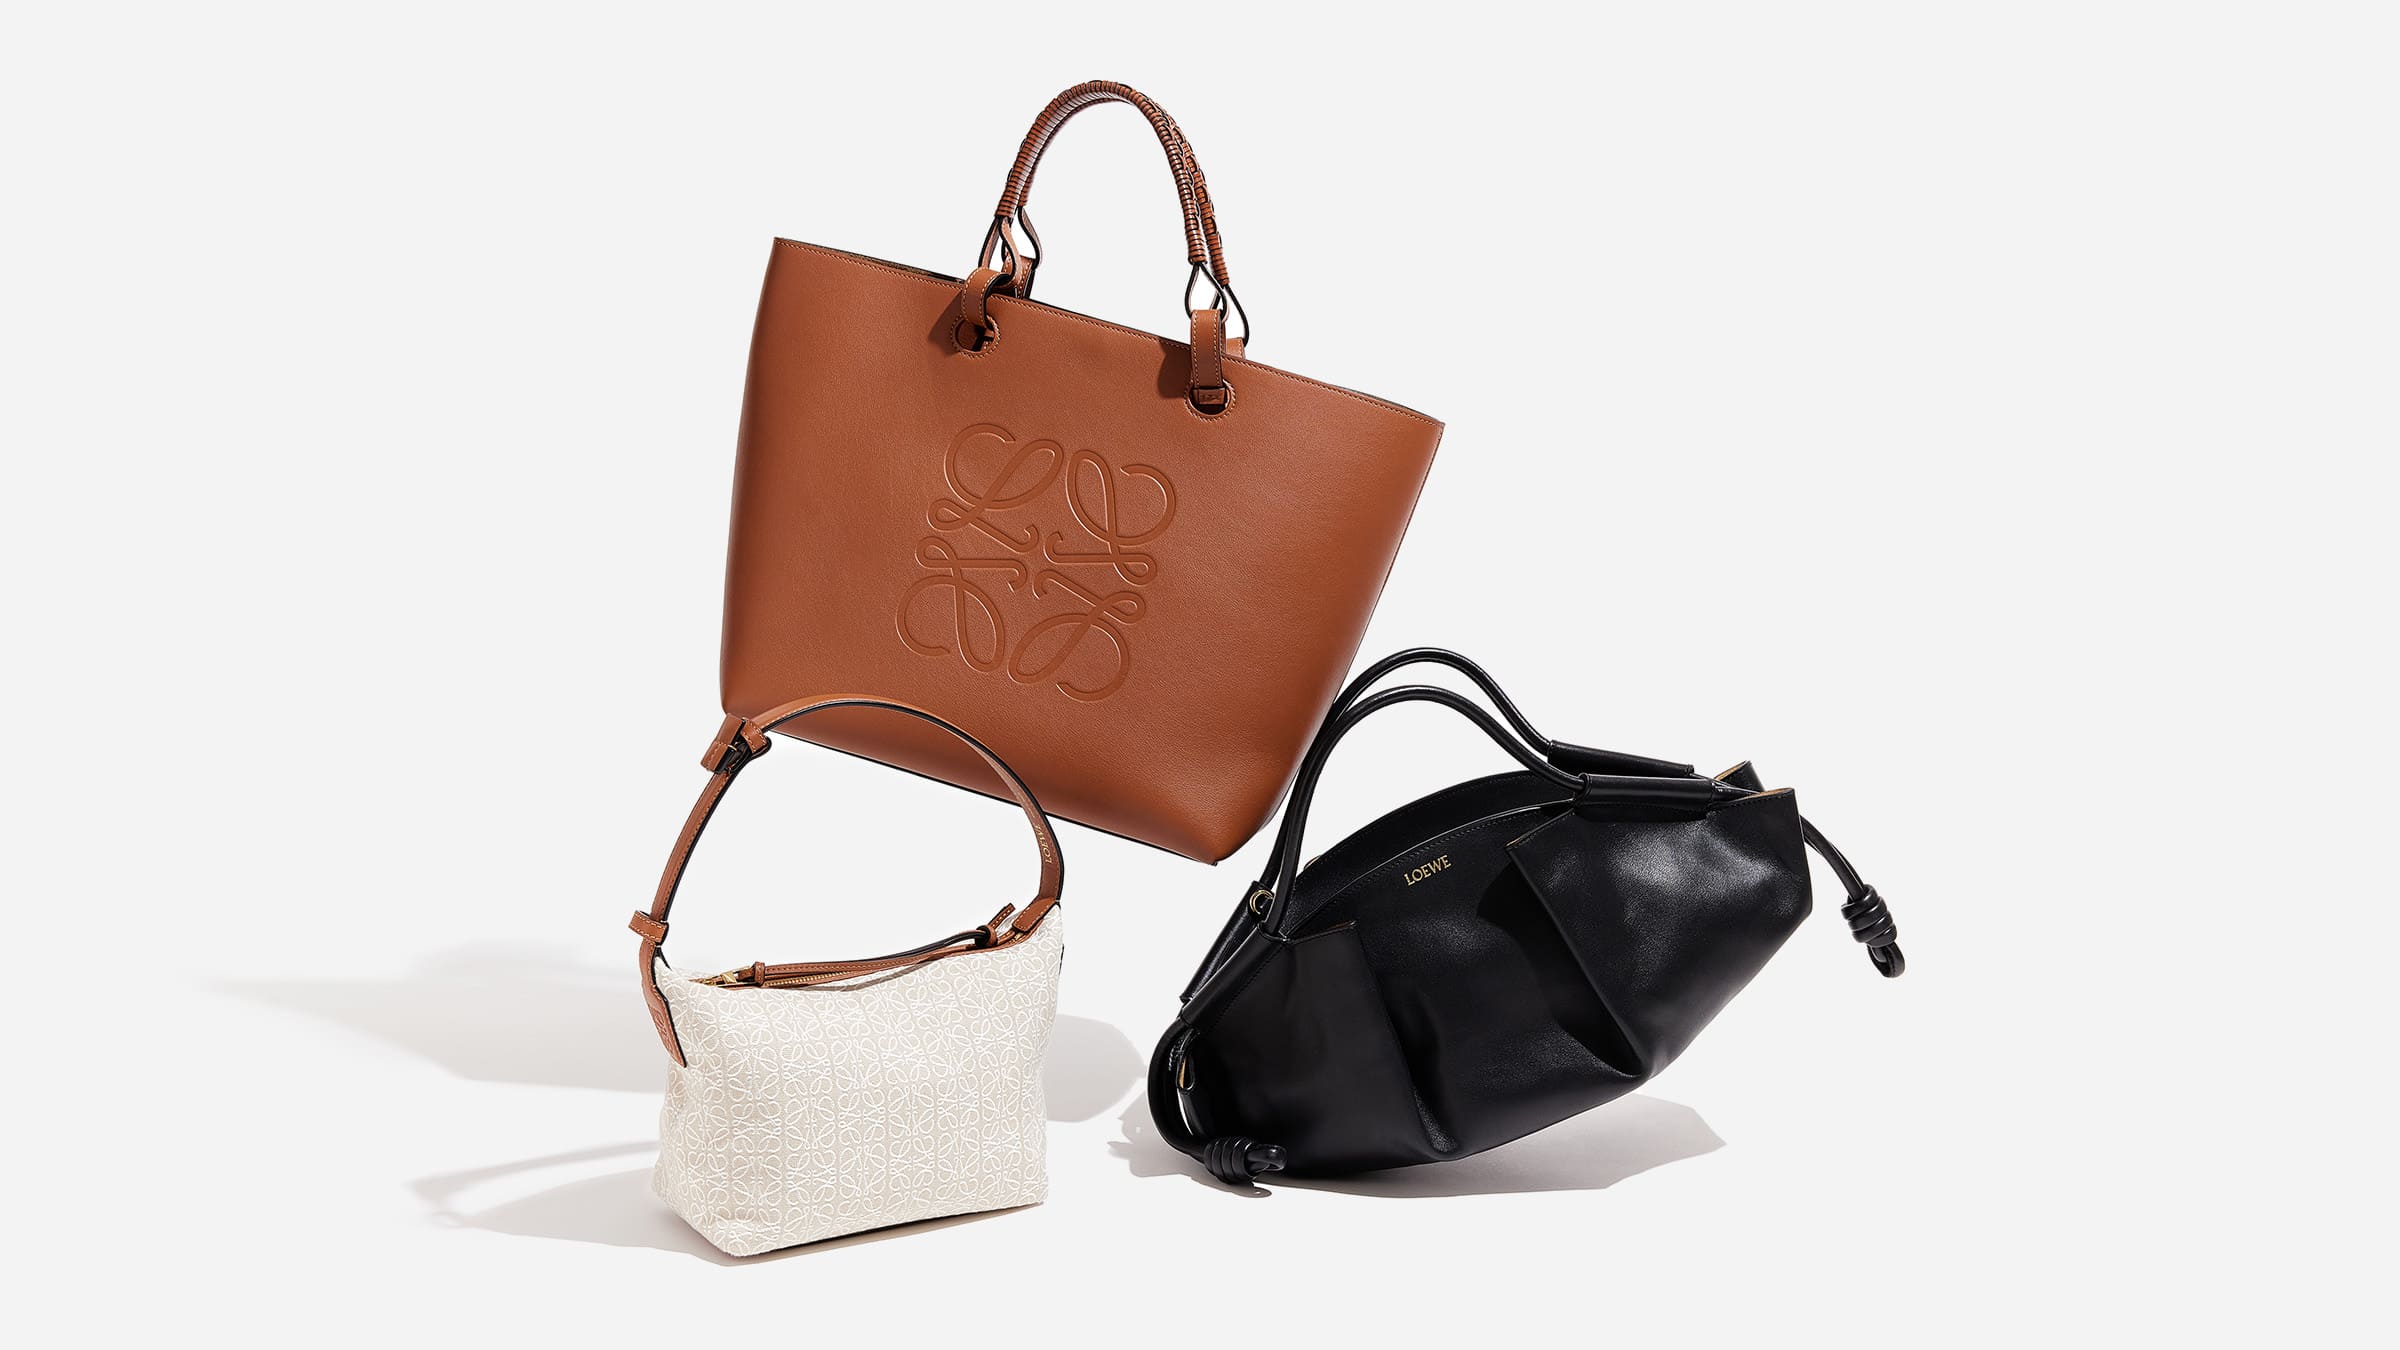 Iconic Loewe Bag Styles - Academy by FASHIONPHILE